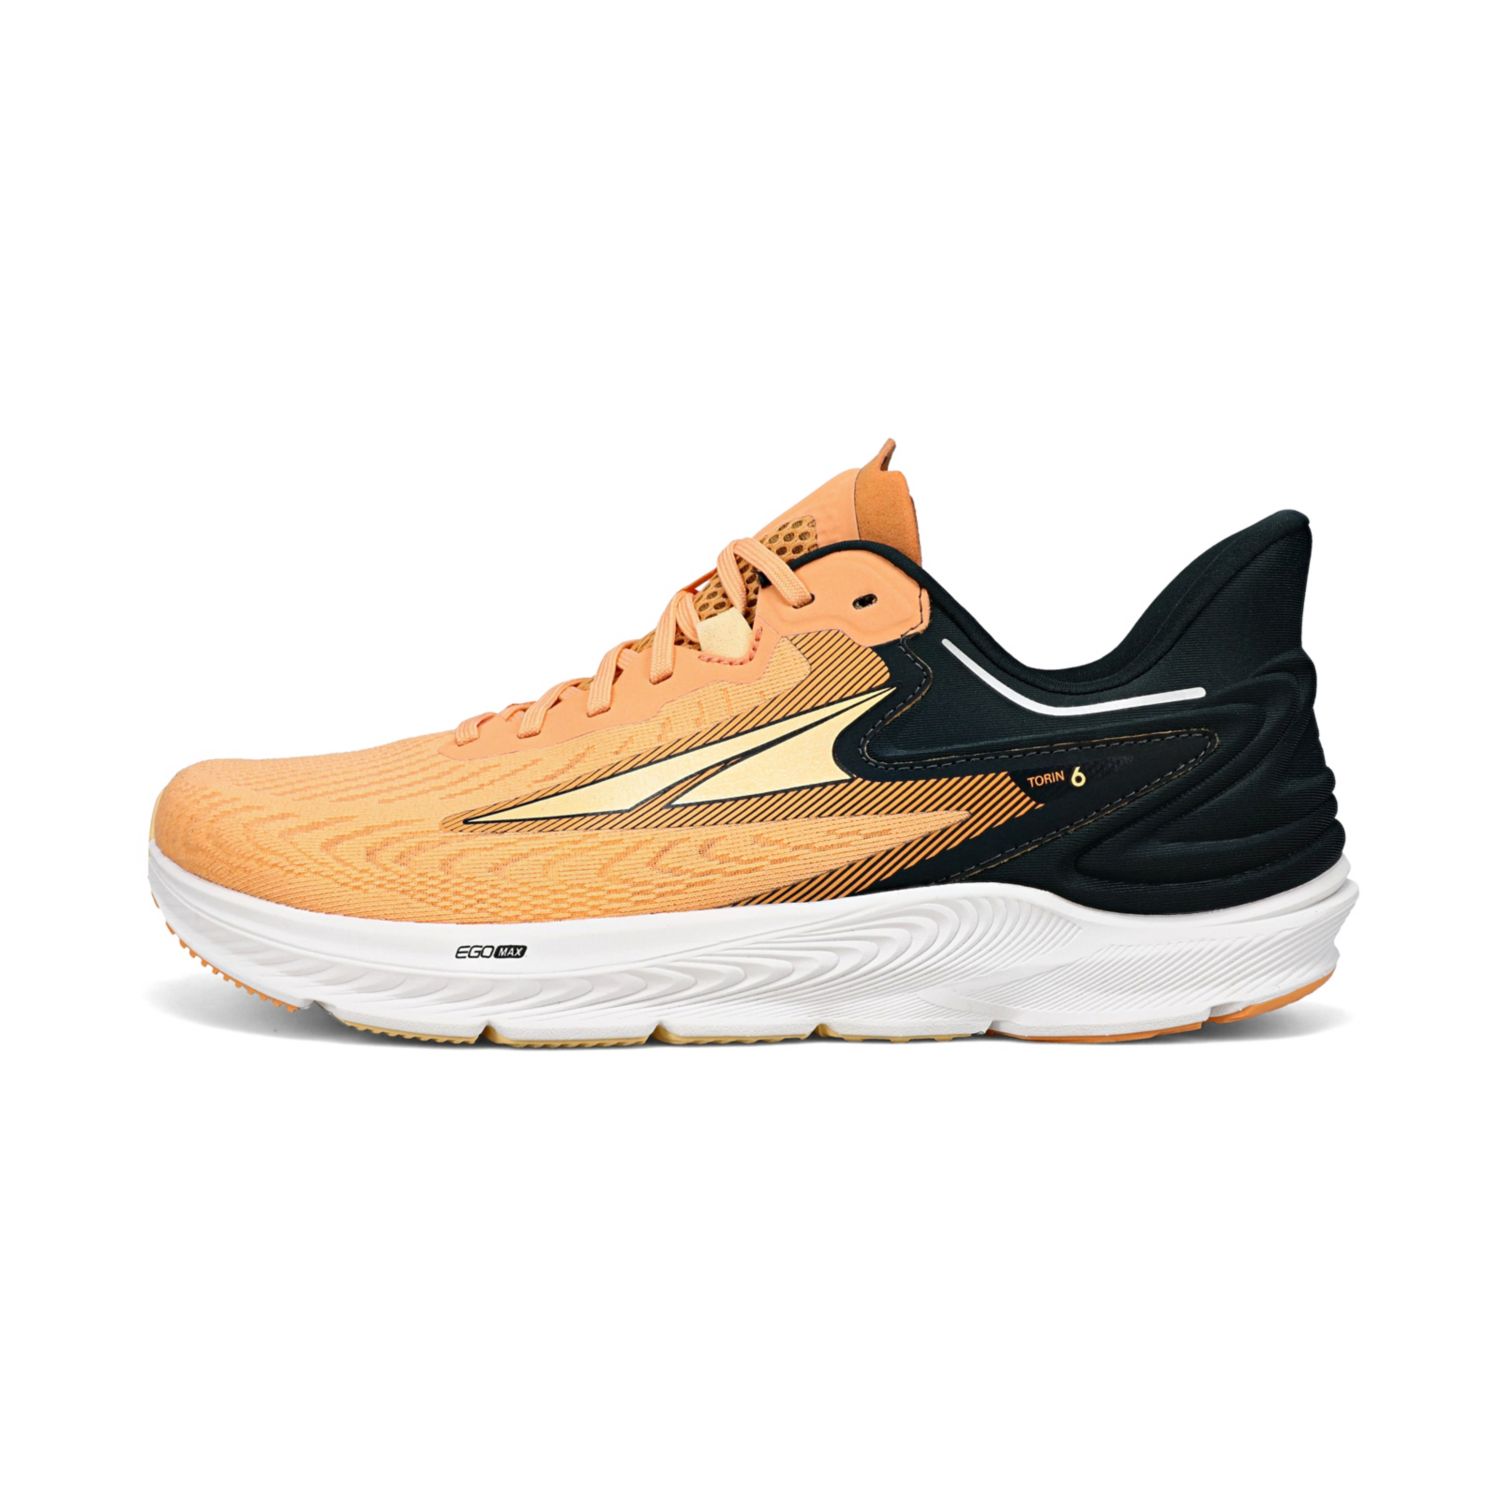 Orange / Black Altra Torin 6 Men's Road Running Shoes | Ireland-38740519